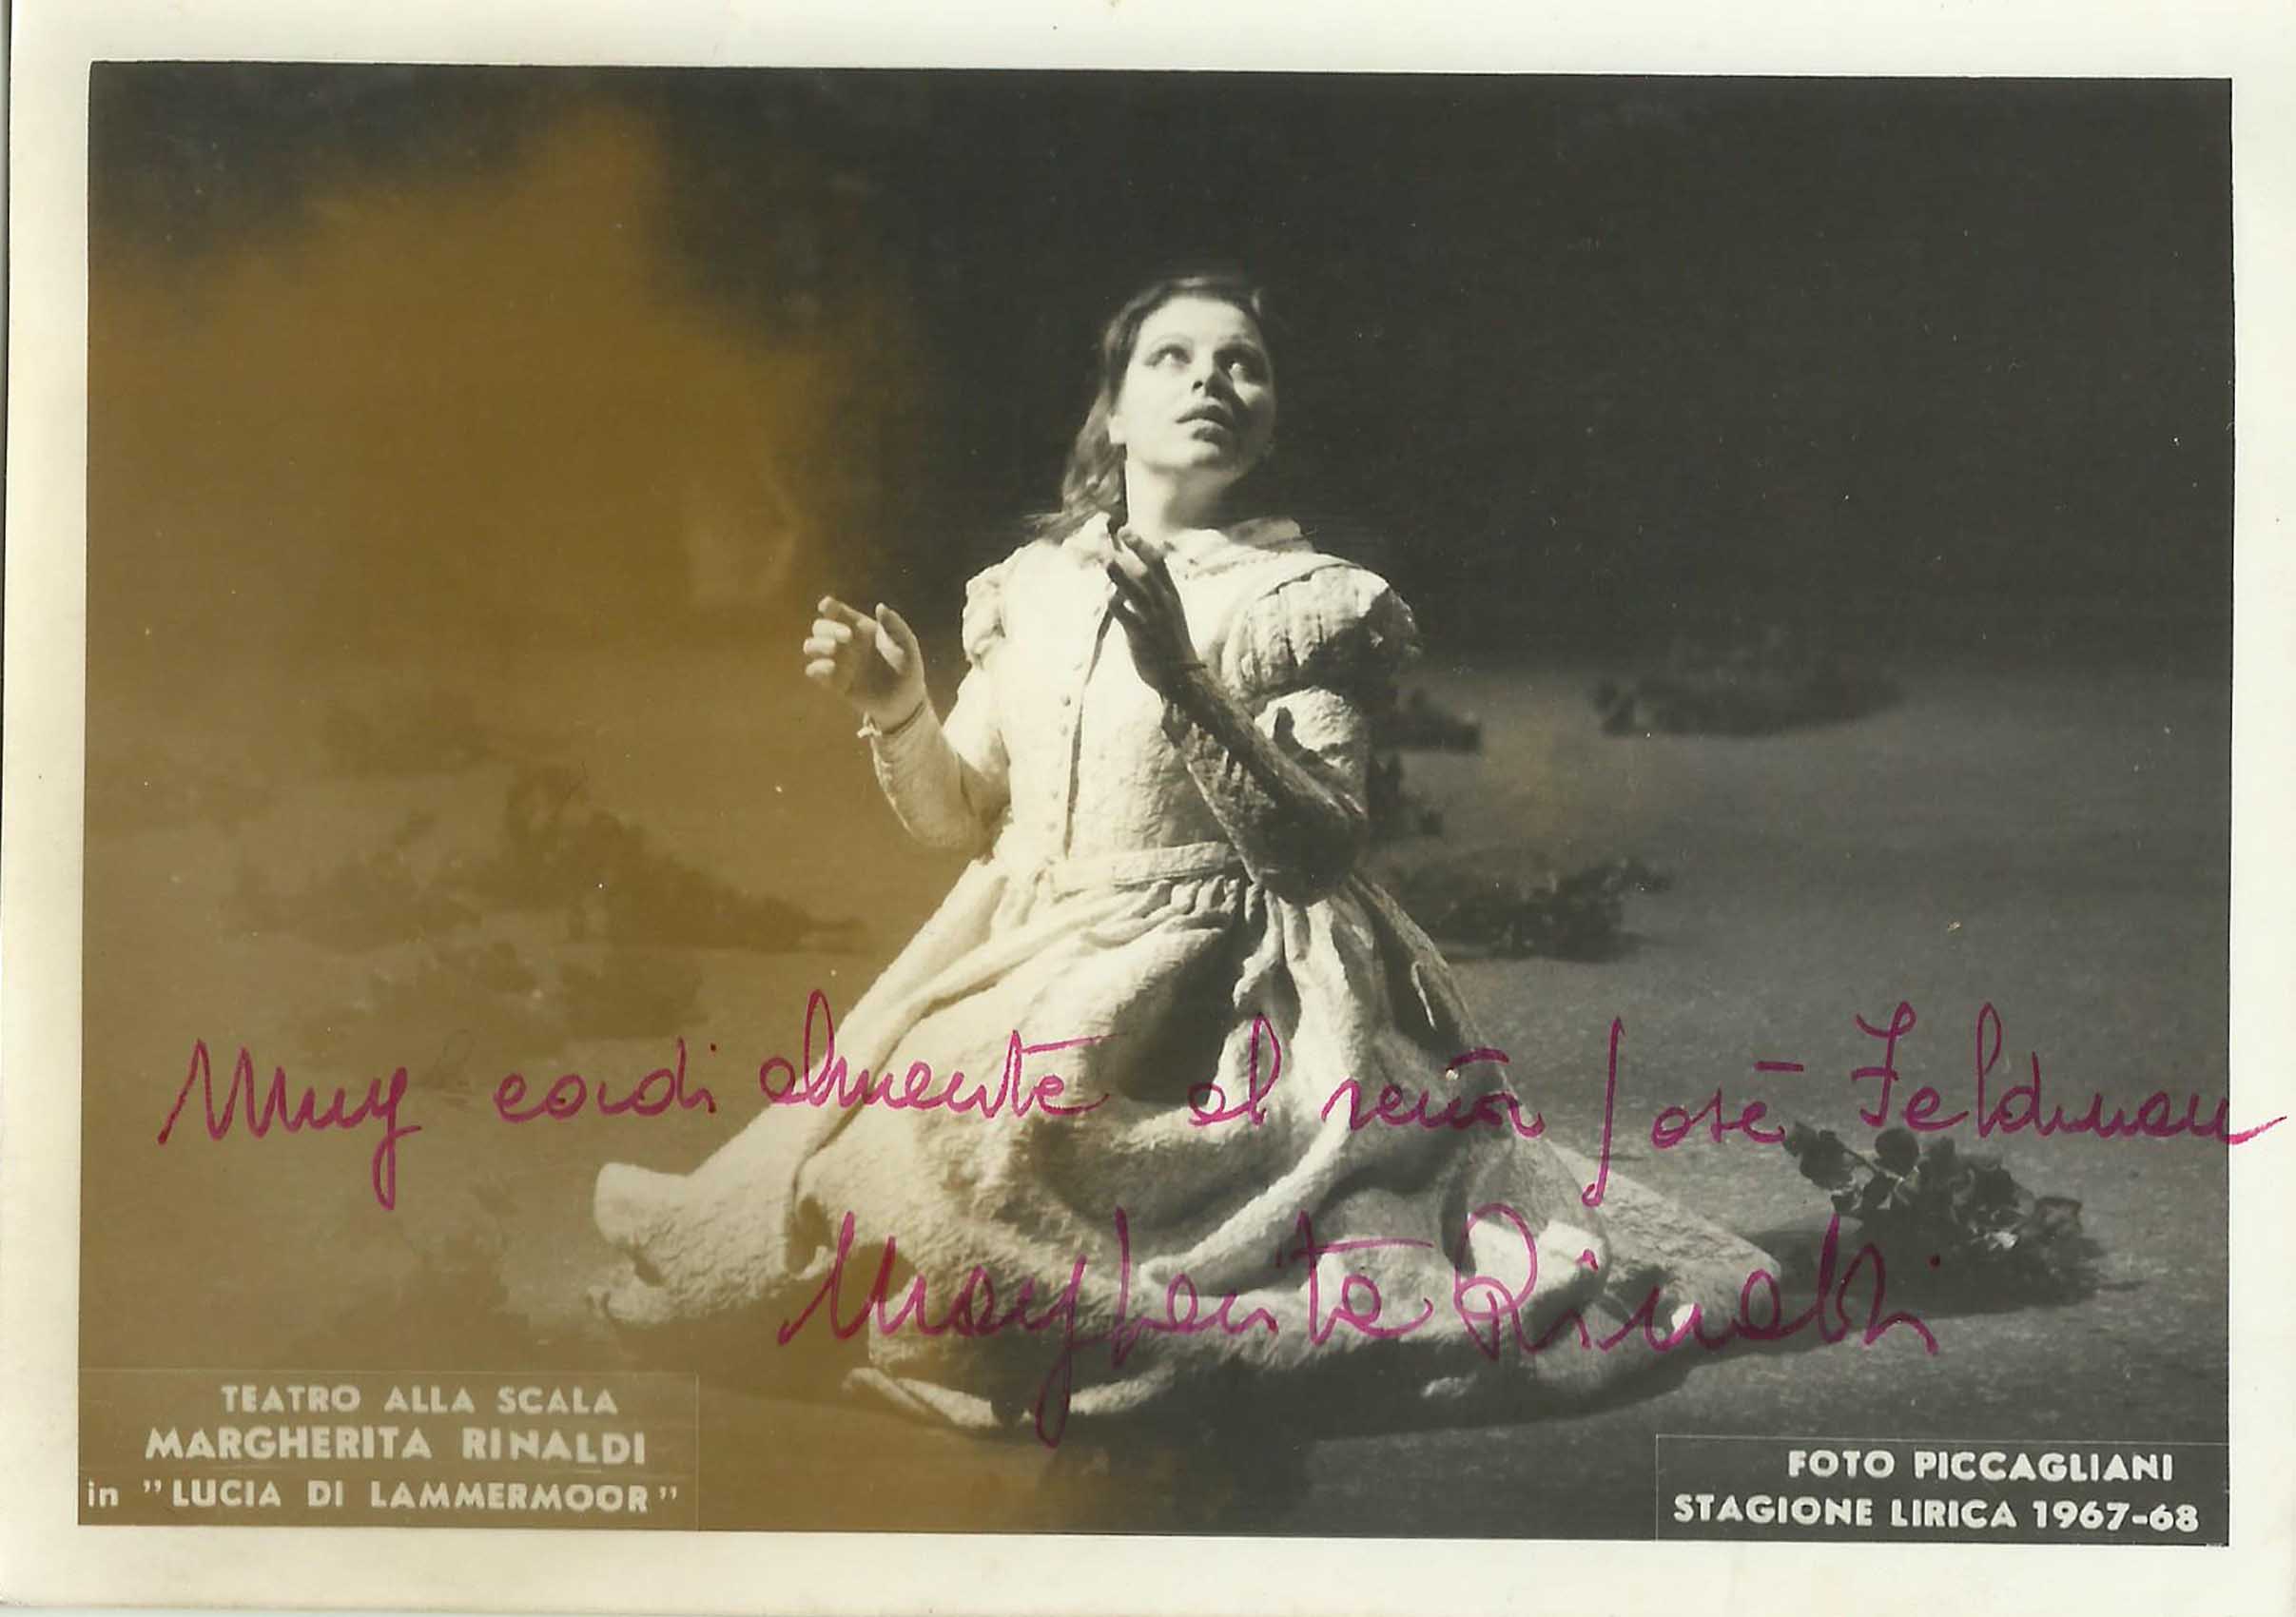 Margherita Rinaldi (1935-01-12 – 1935-01-12). Operatic sopranos